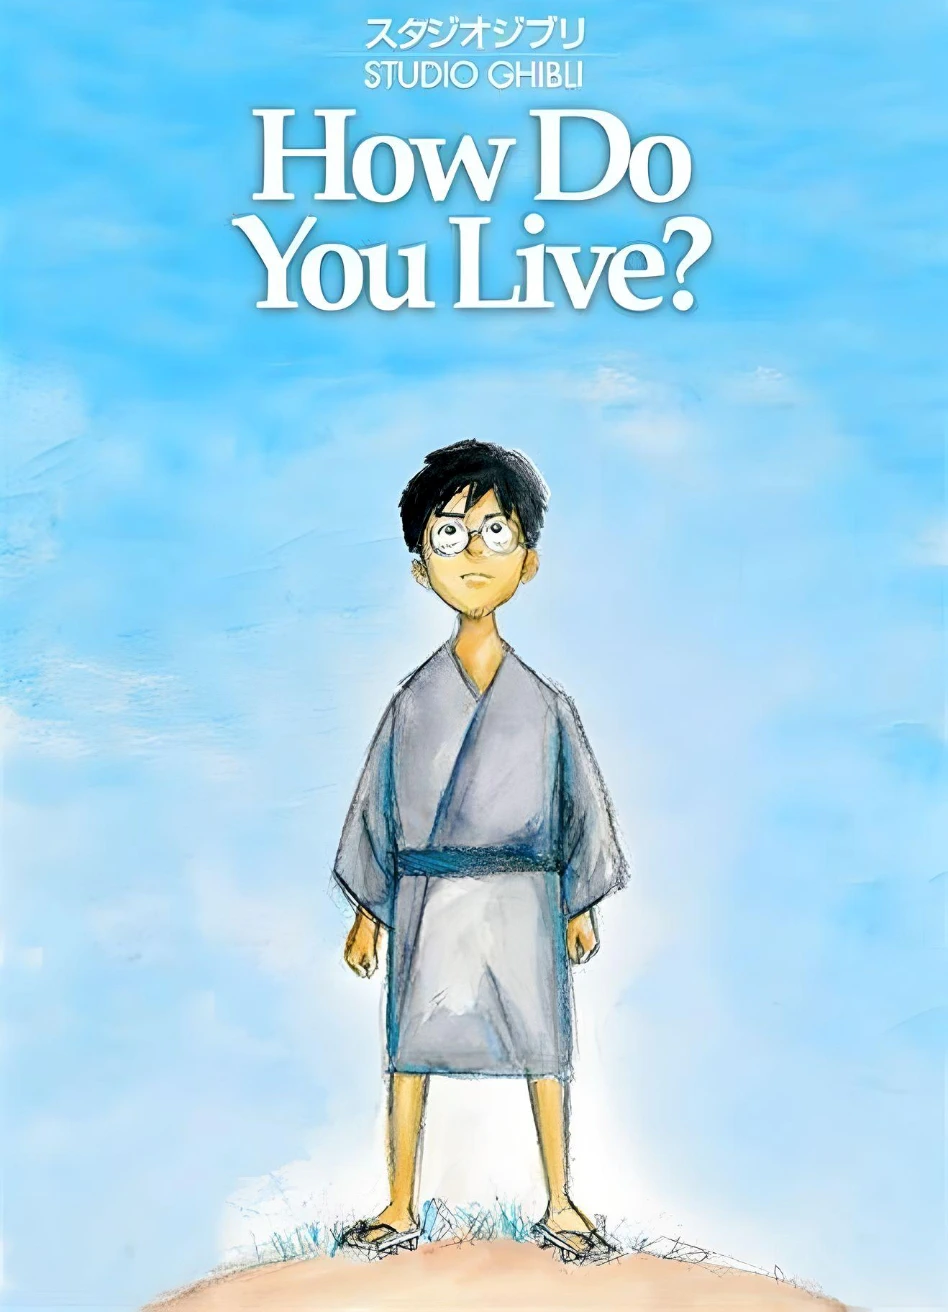 Studio Ghibli Sets New Miyazaki Hayao Film, ‘How Do You Live,’ for Summer 2023 (July 14, 2023)